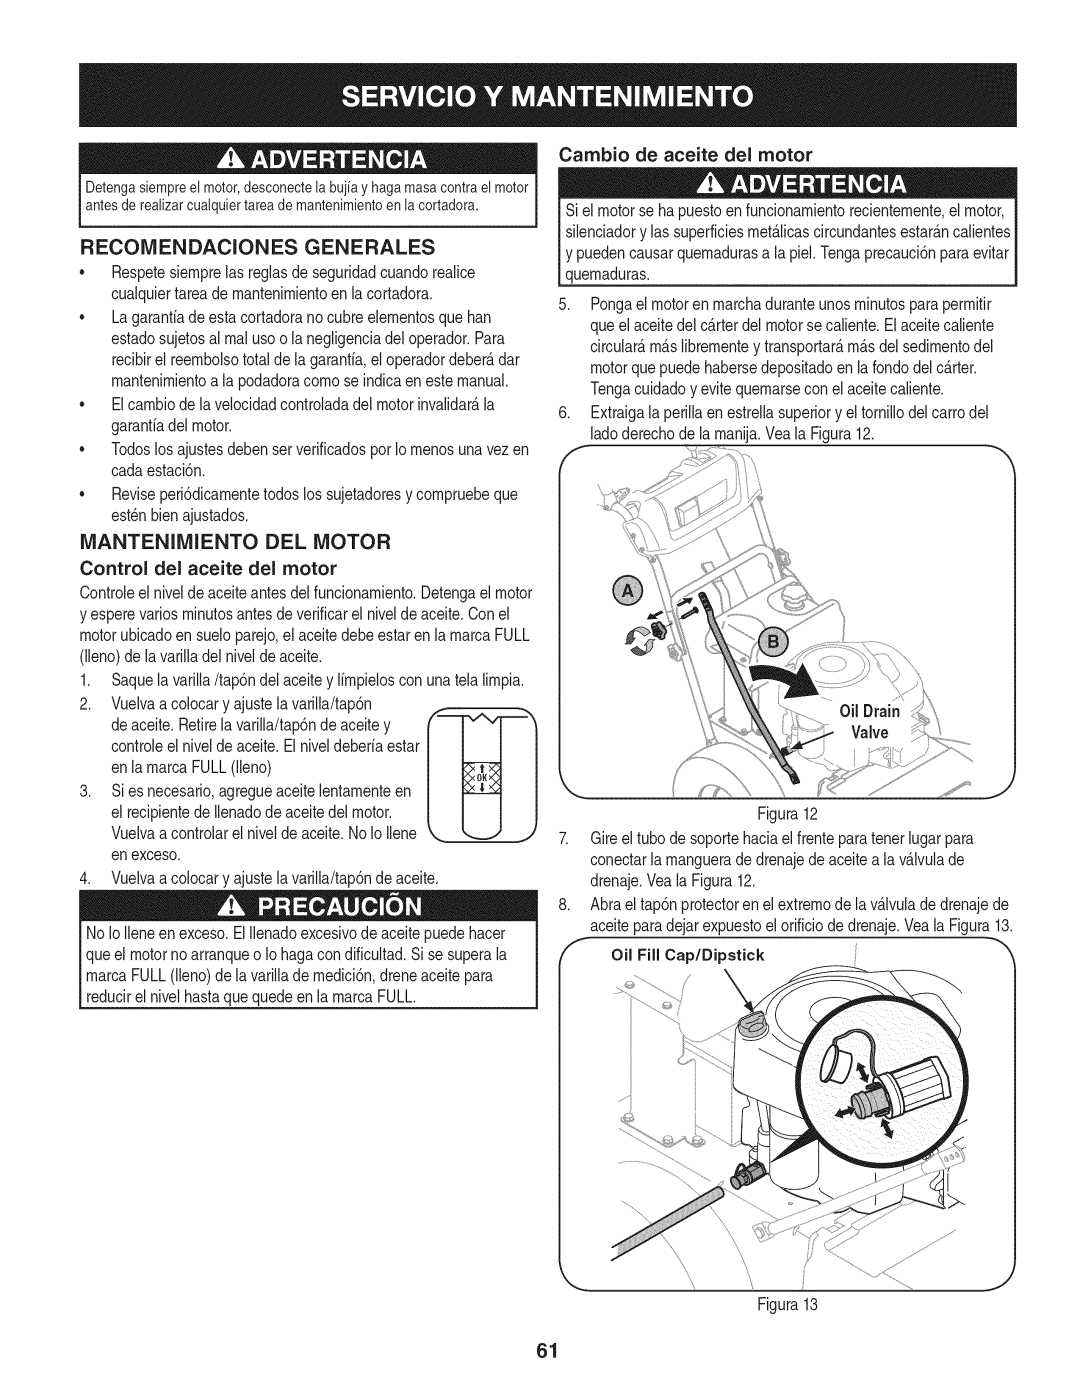 Craftsman 247.889980 manual Recomendaciones Generales, Mantenimiento Del Motor, Oil Fill Cap/Dipstick 